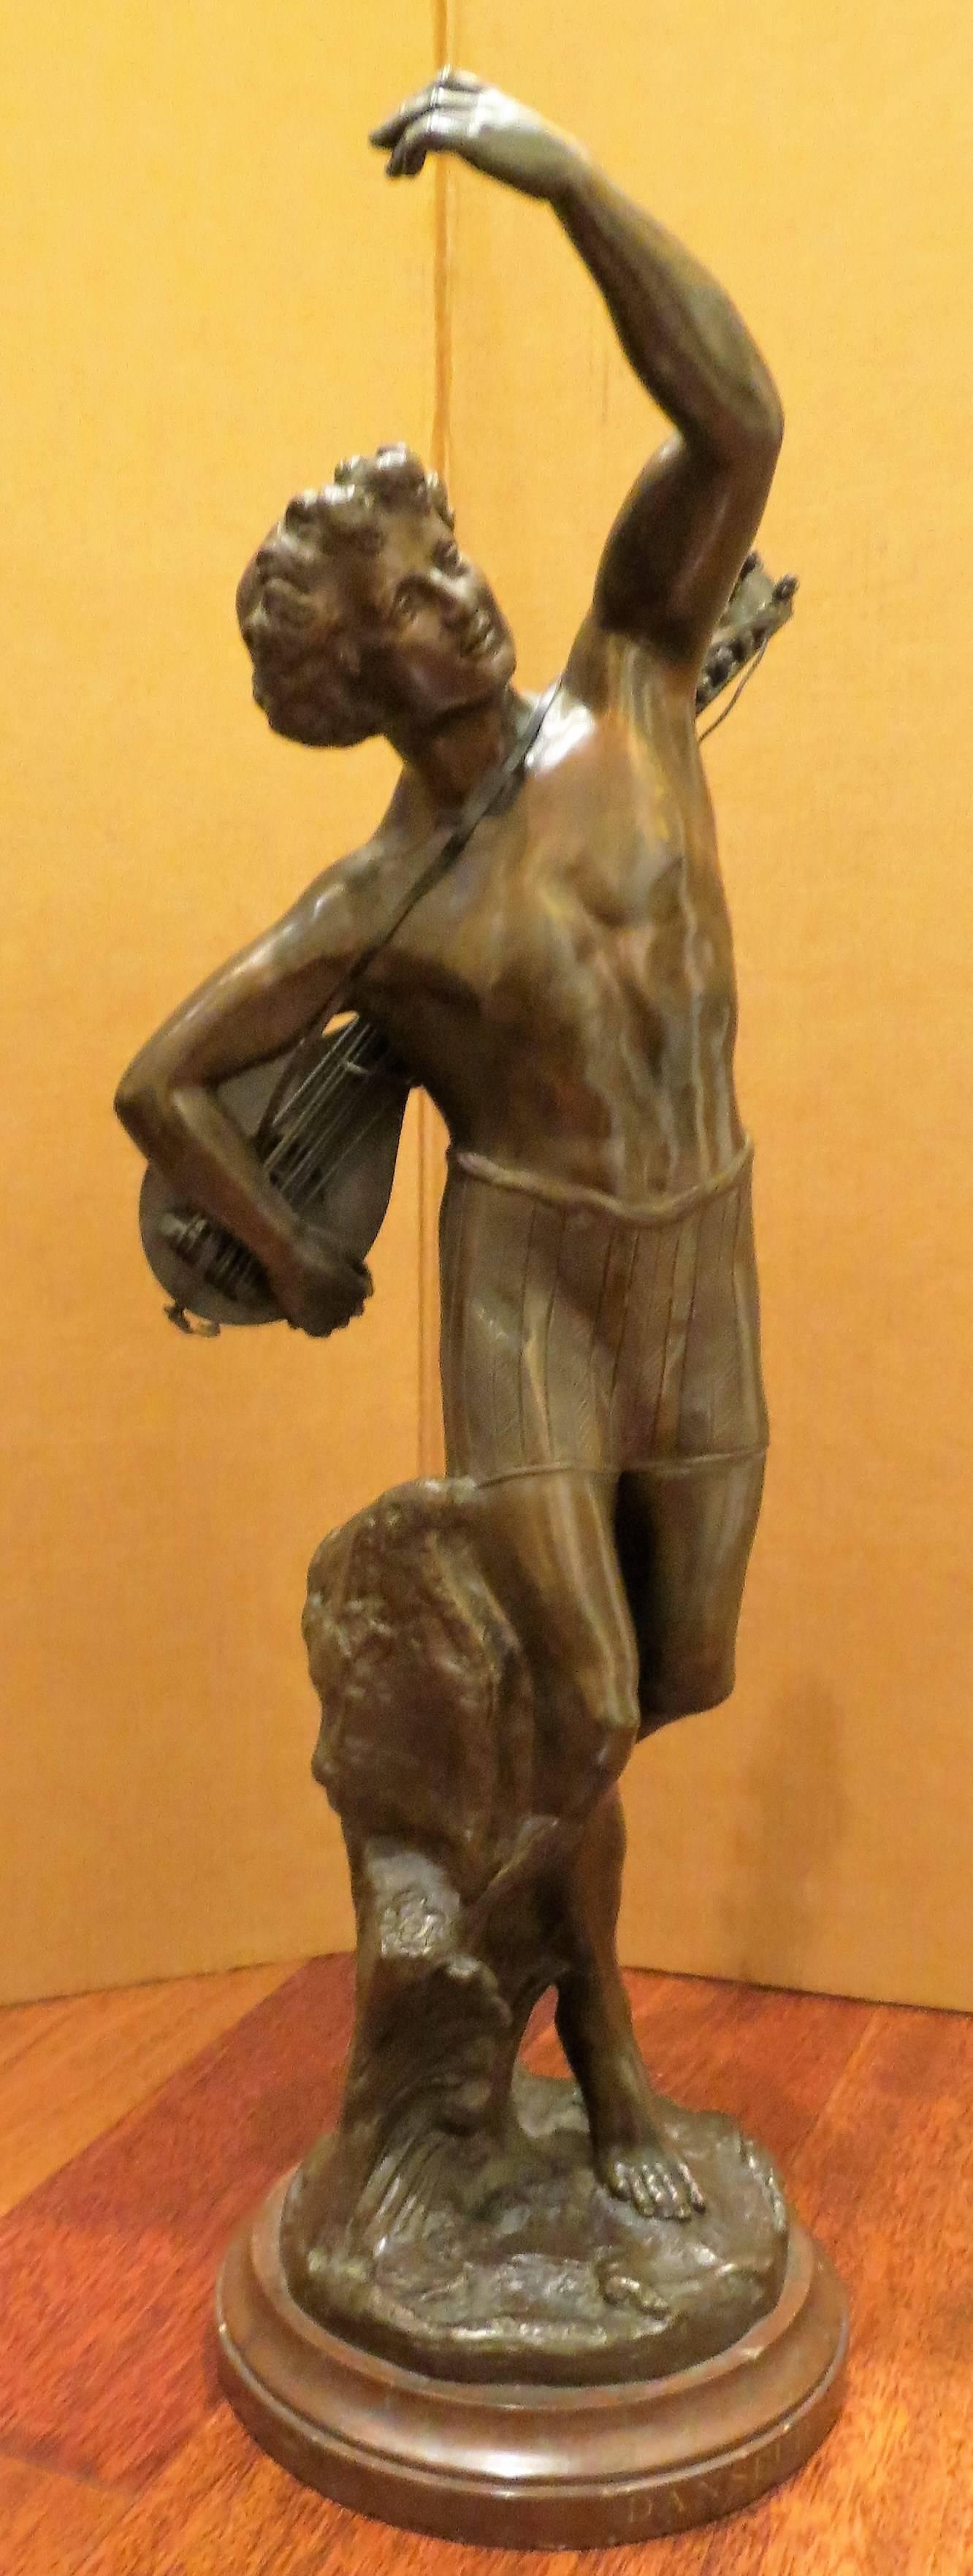 Pierre E. Leysalle Figurative Sculpture - "Bouzouki Player"